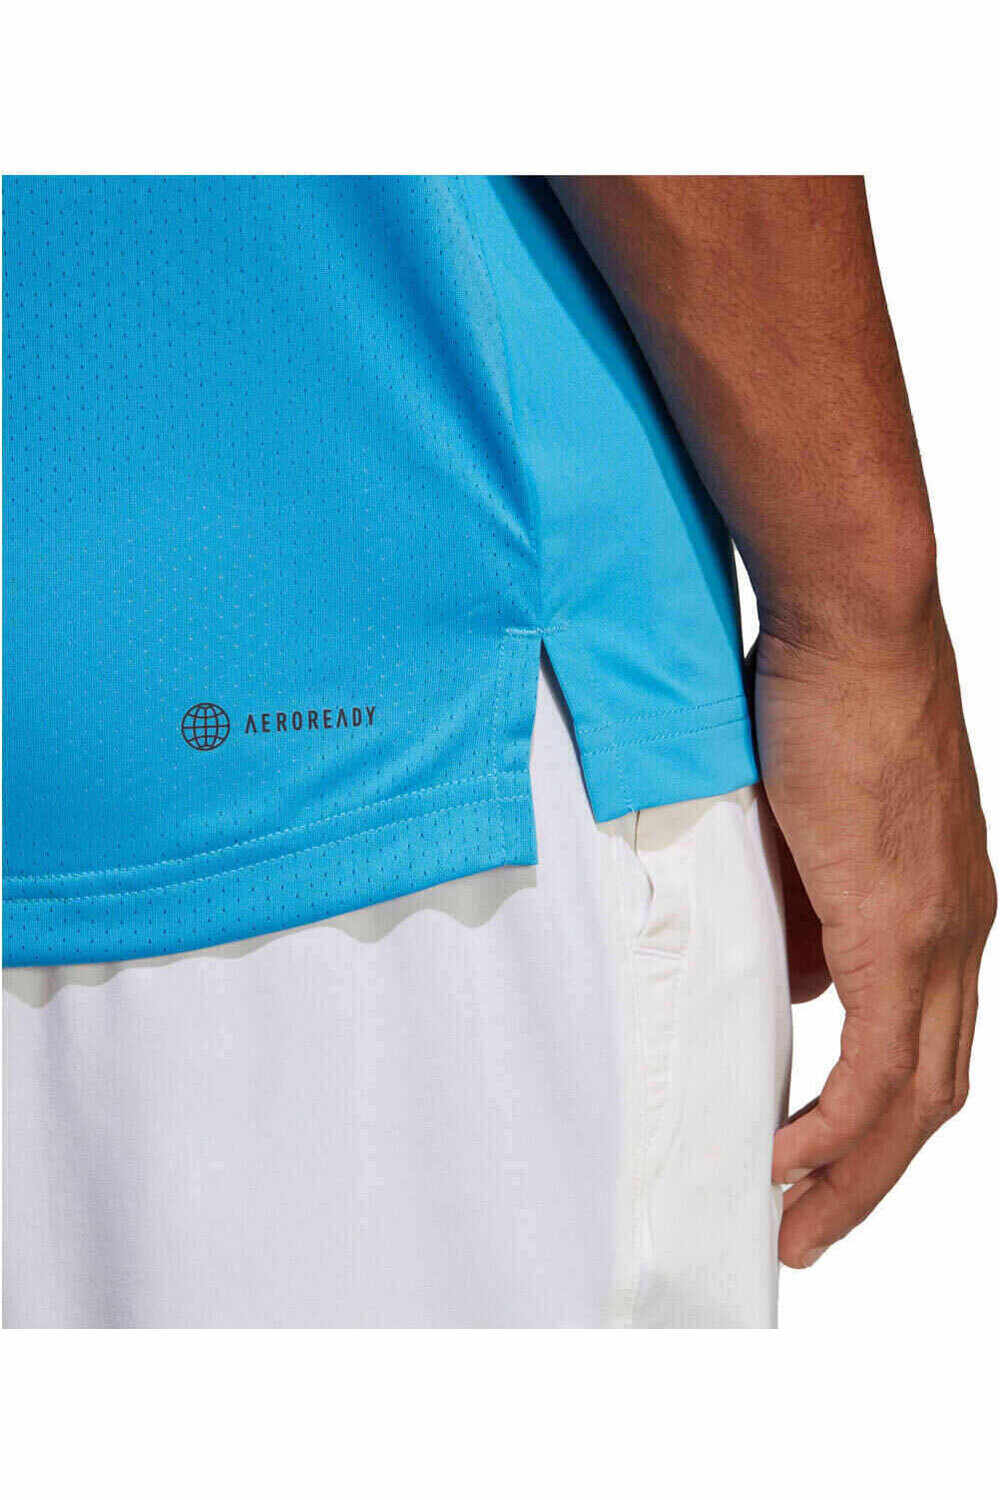 adidas camiseta tenis manga corta hombre Club Tennis 03